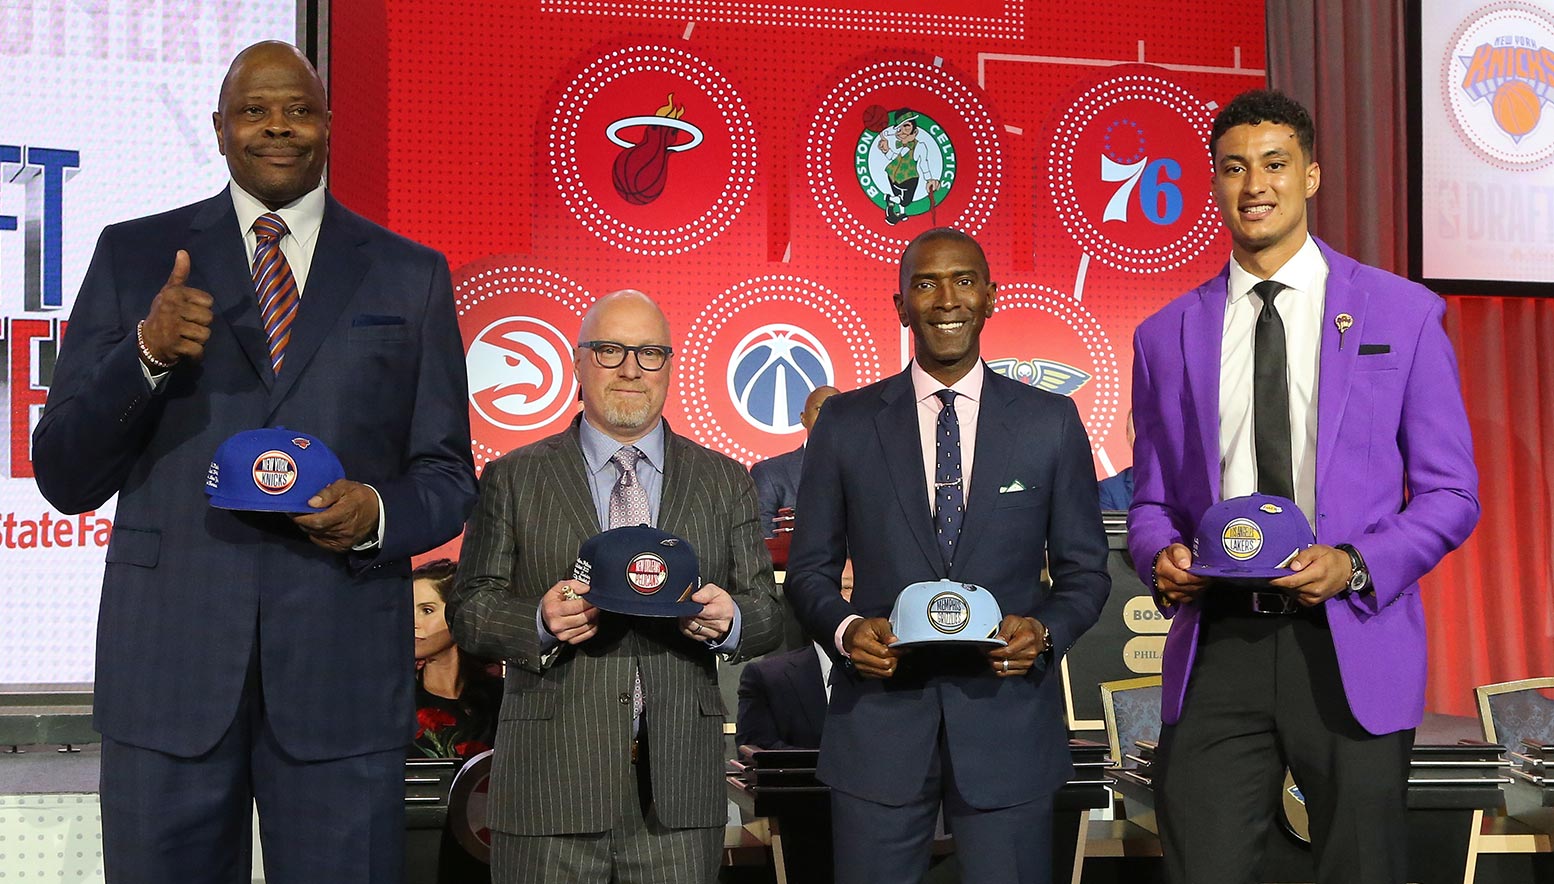 Top 4 NBA Draft Lottery Teams pose